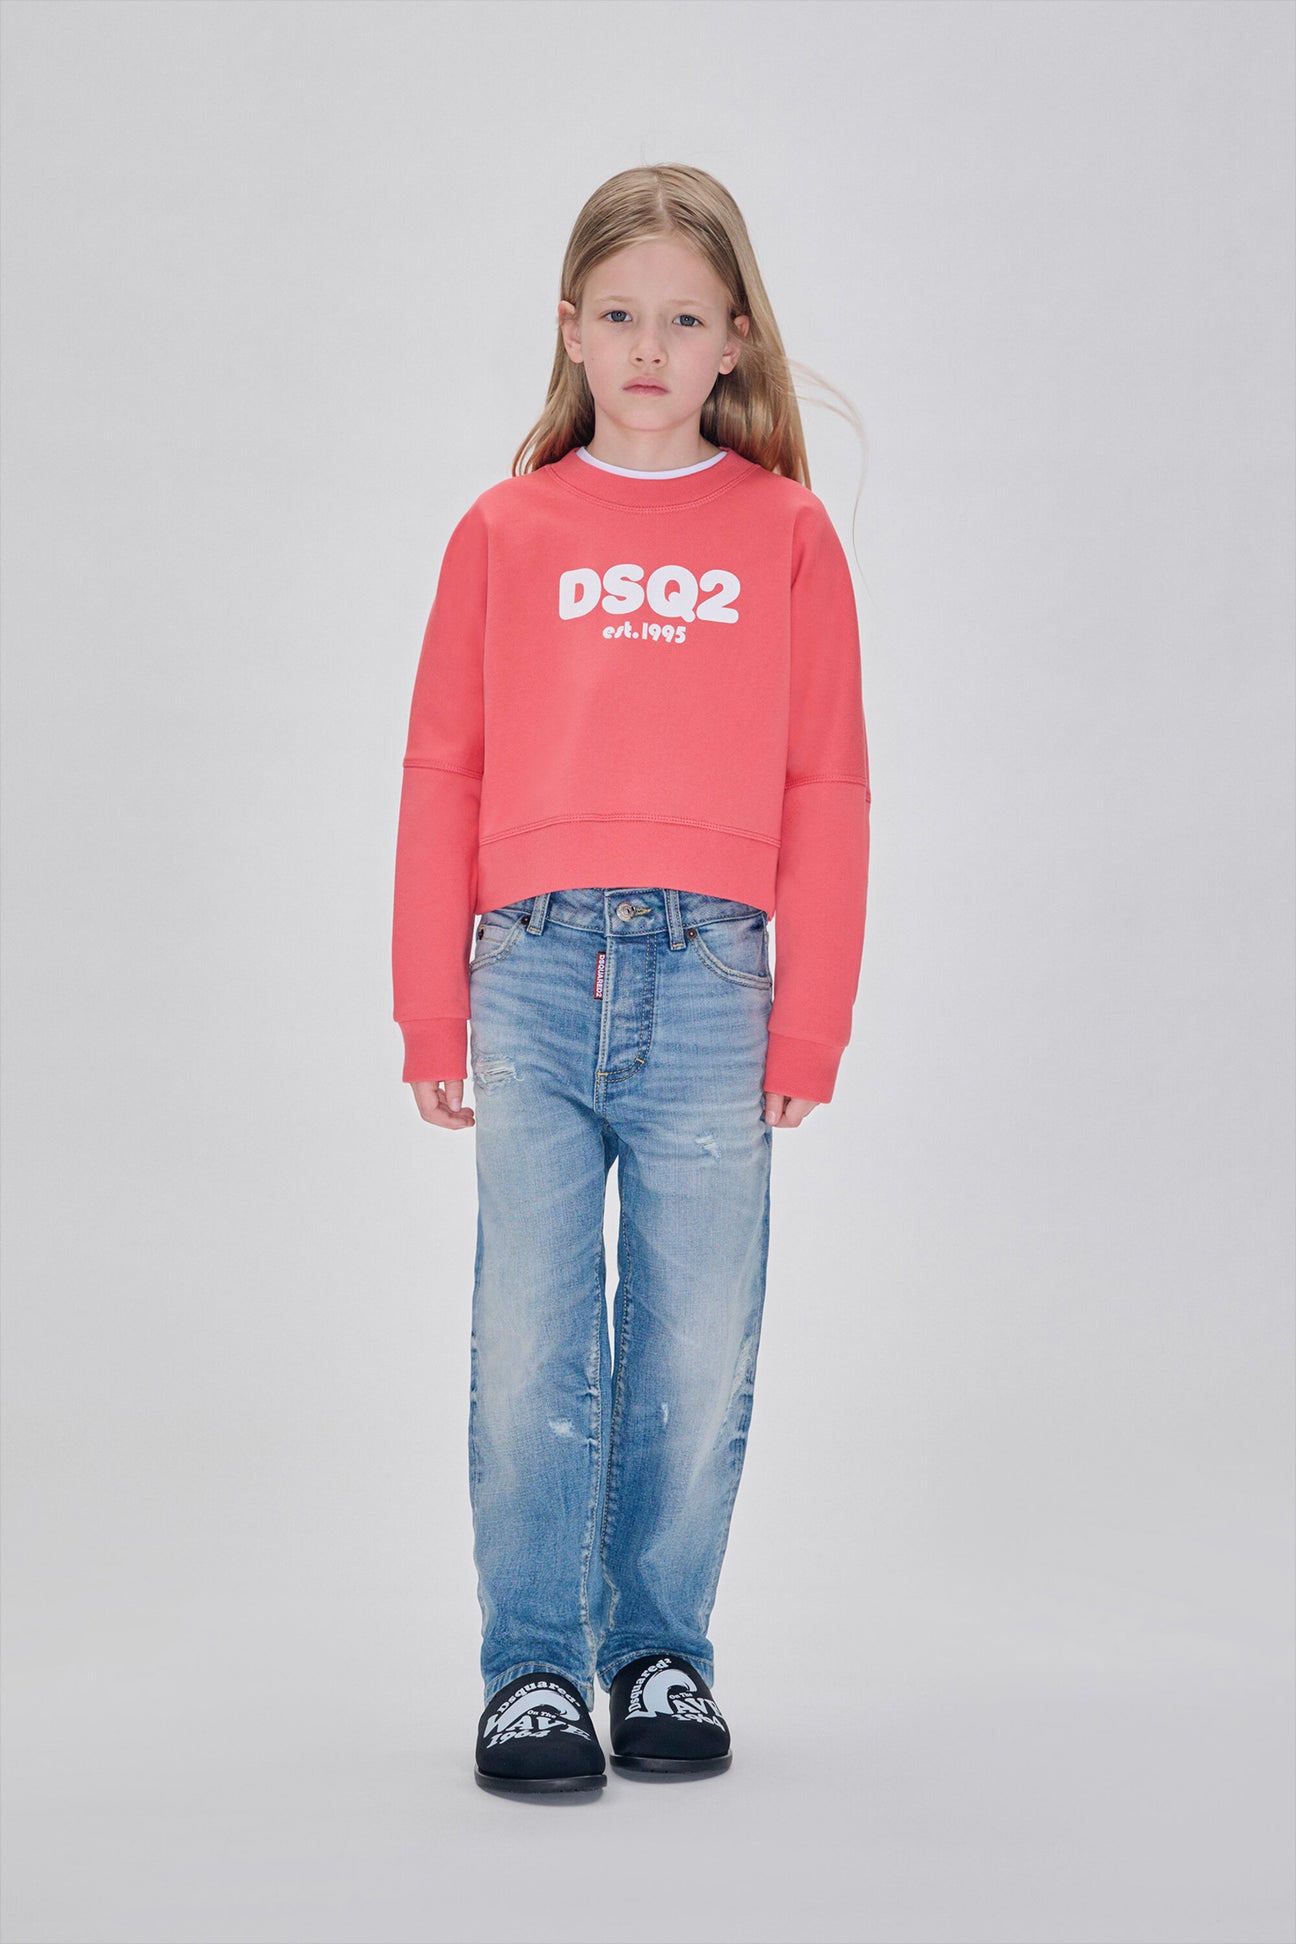 DSQ2 branded cropped sweatshirt est.1995 